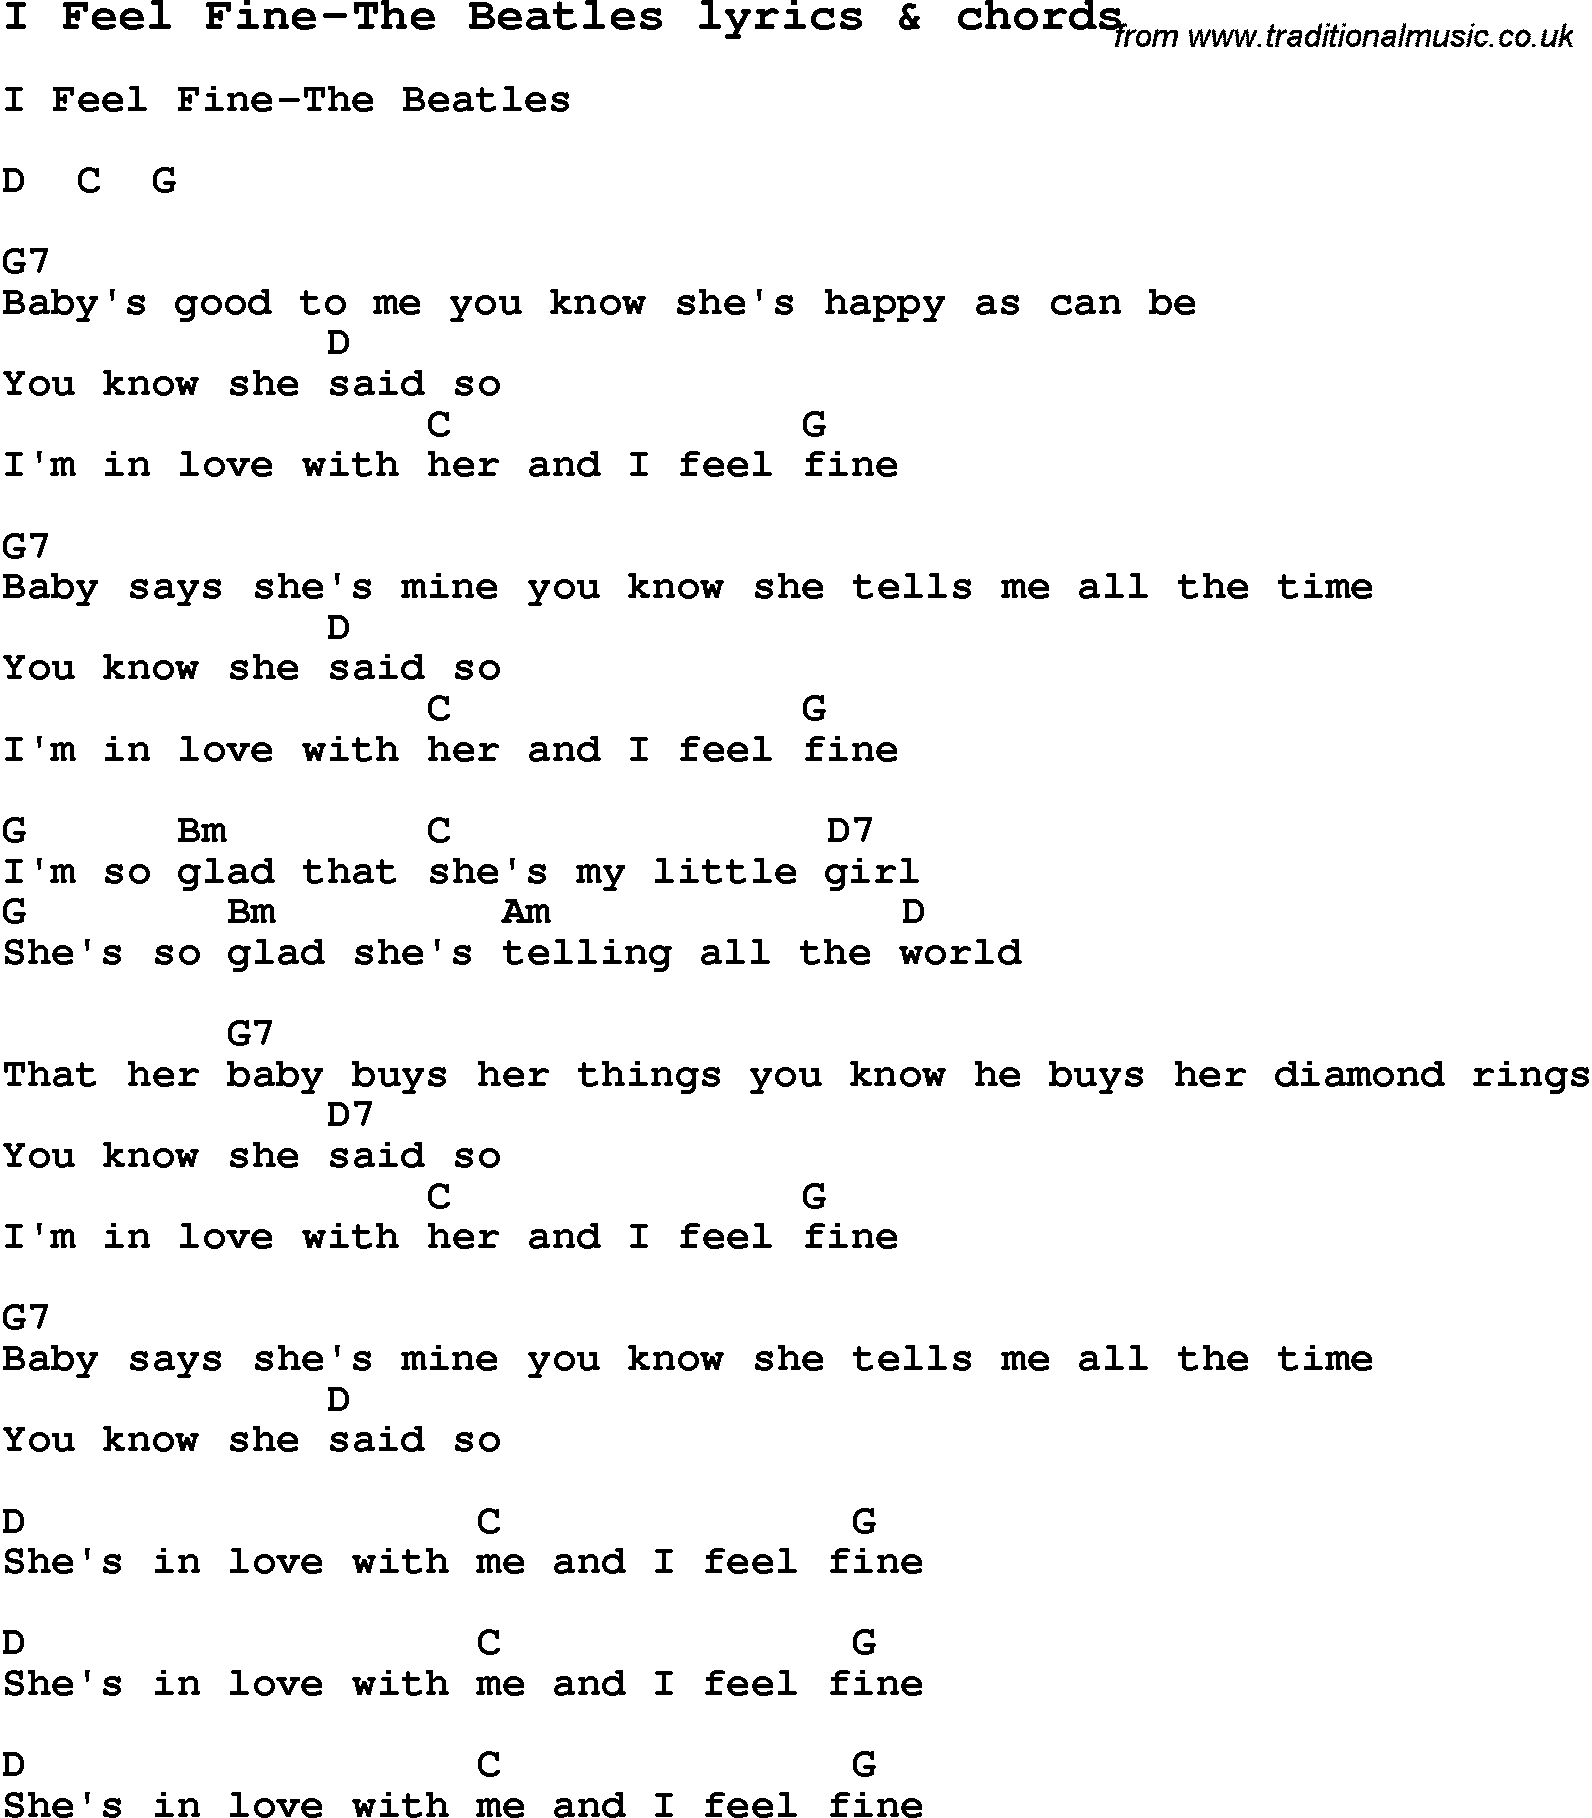 Love Song Lyrics for: I Feel Fine-The Beatles with chords for Ukulele, Guitar Banjo etc.